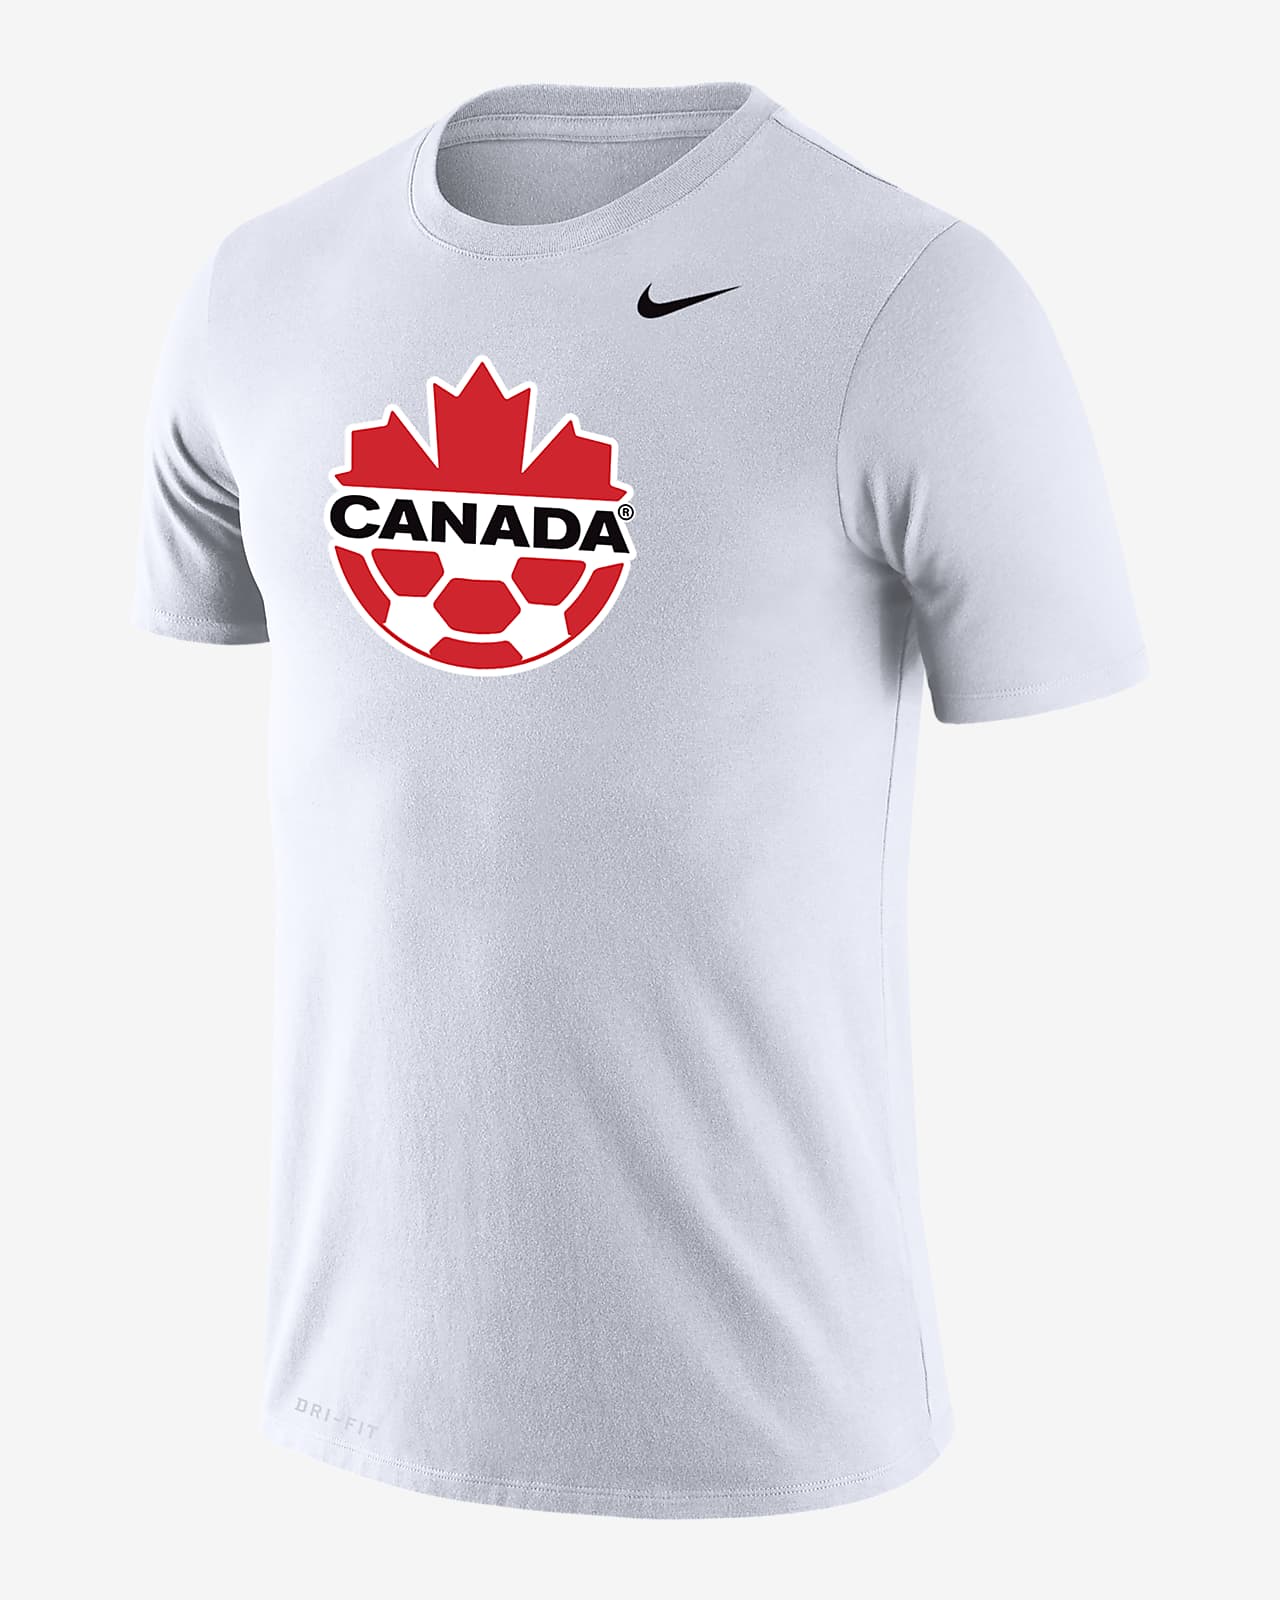 Canada Legend Men's Nike Dri-FIT T-Shirt